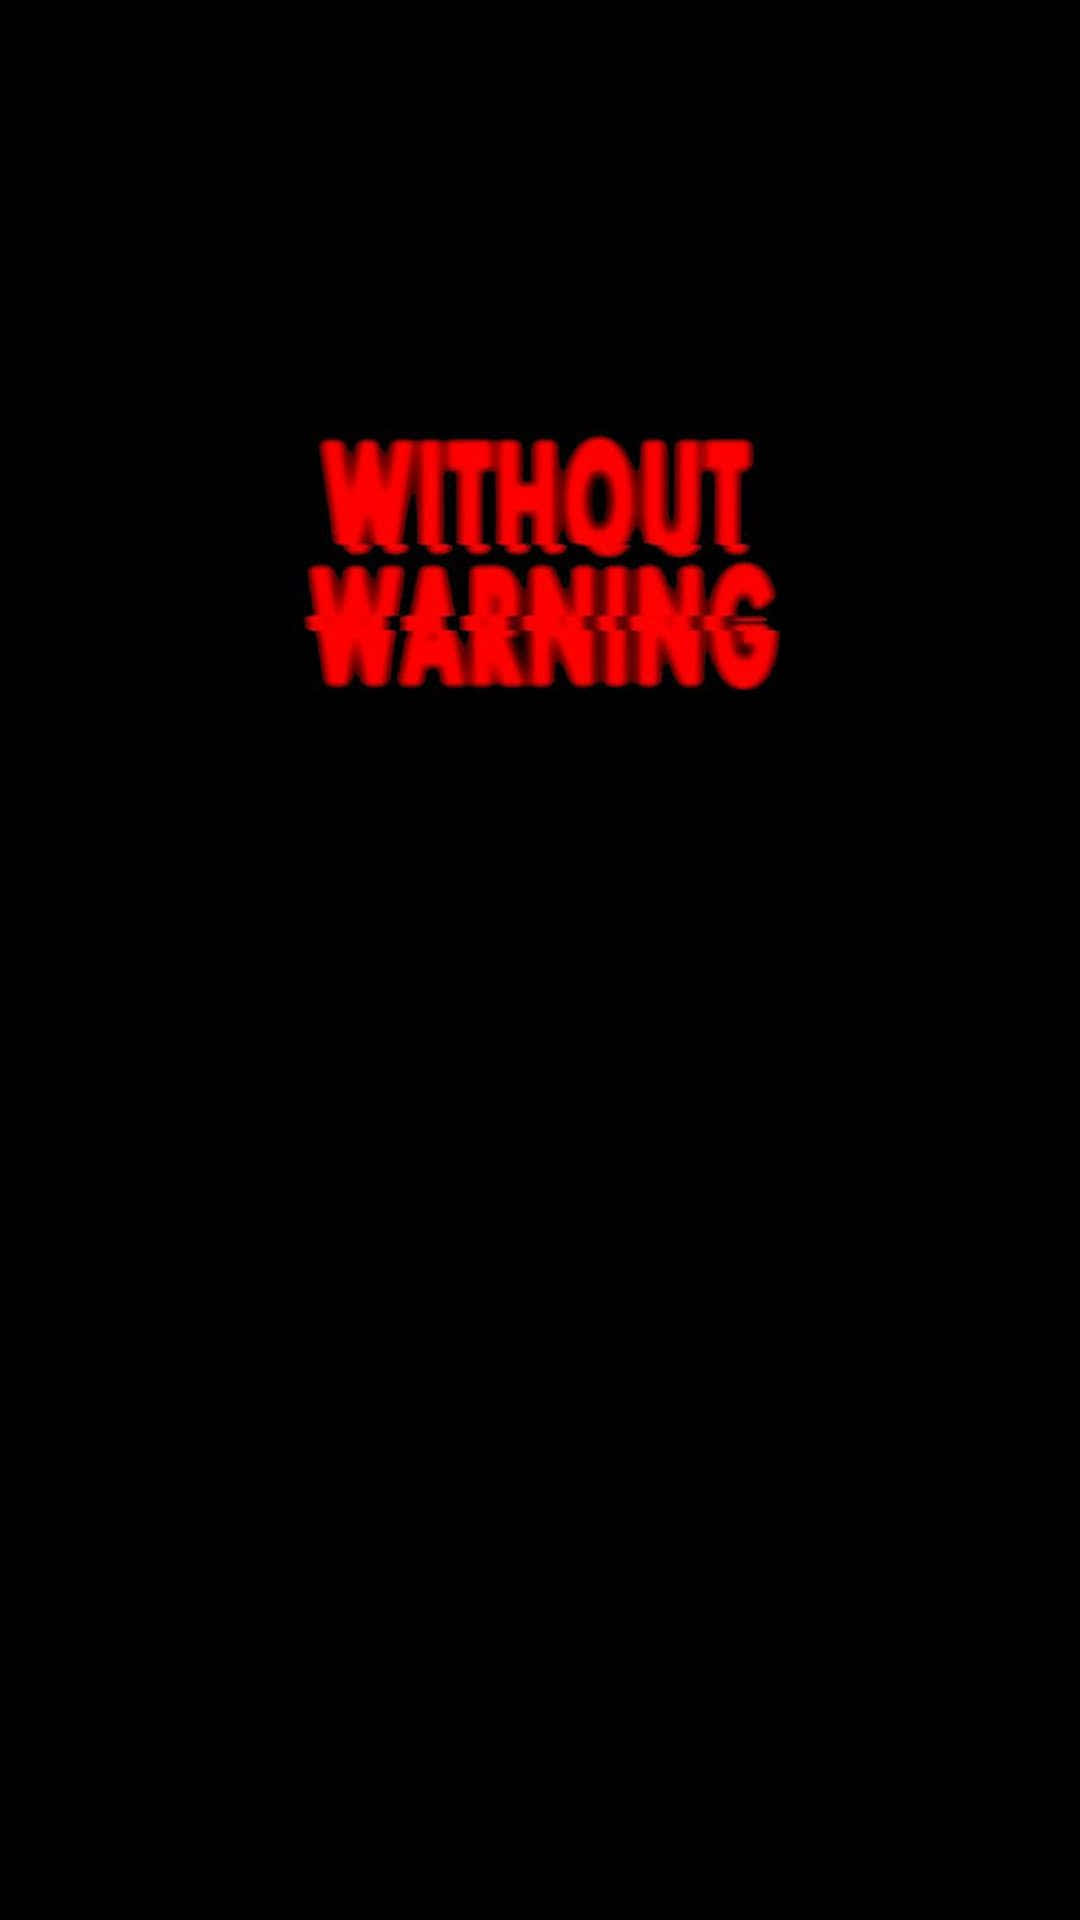 warning iphone wallpaper